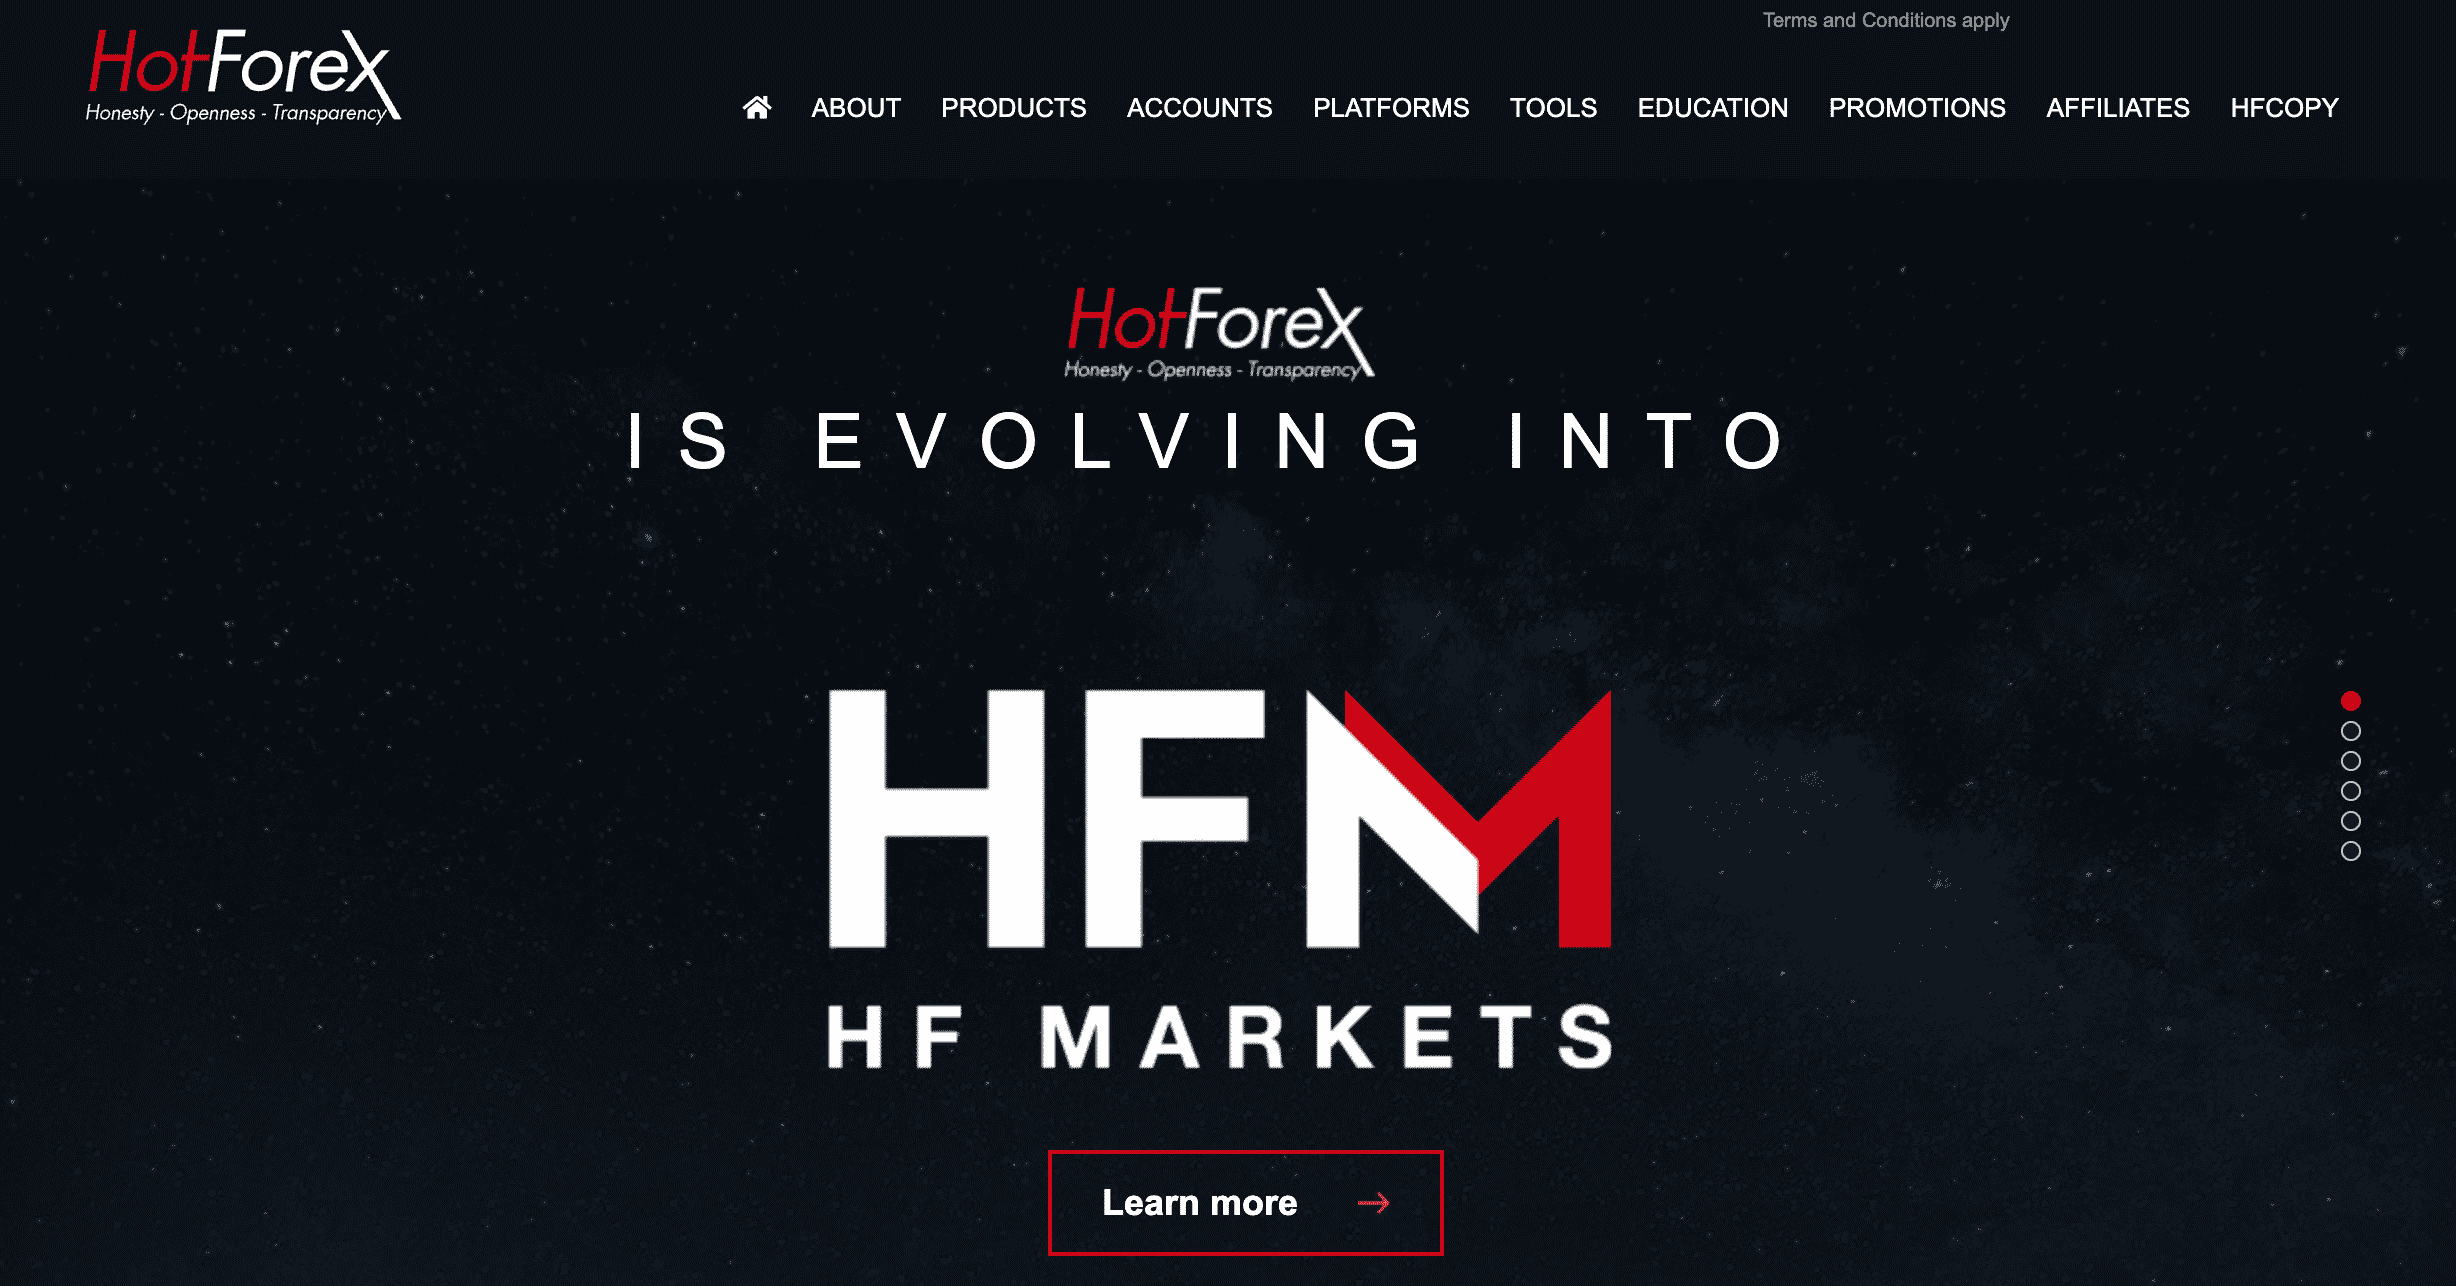 hotforex webinars for professional development